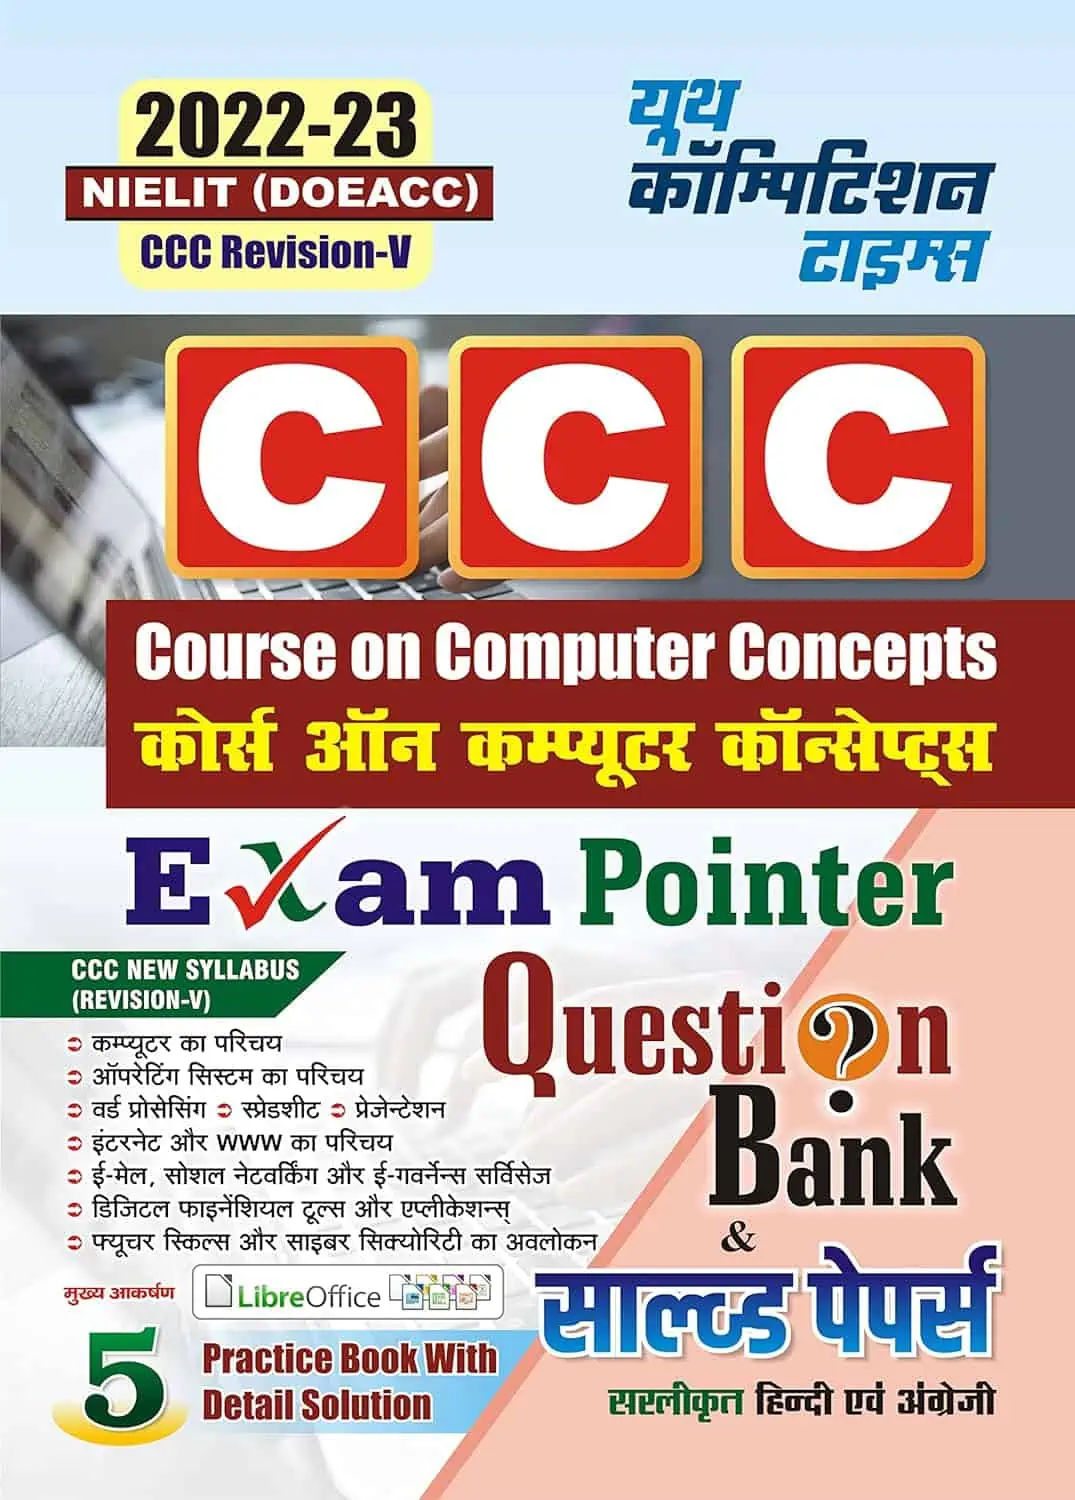 YCT CCC Exam Pointer Question Bank PDF [Hindi Medium]